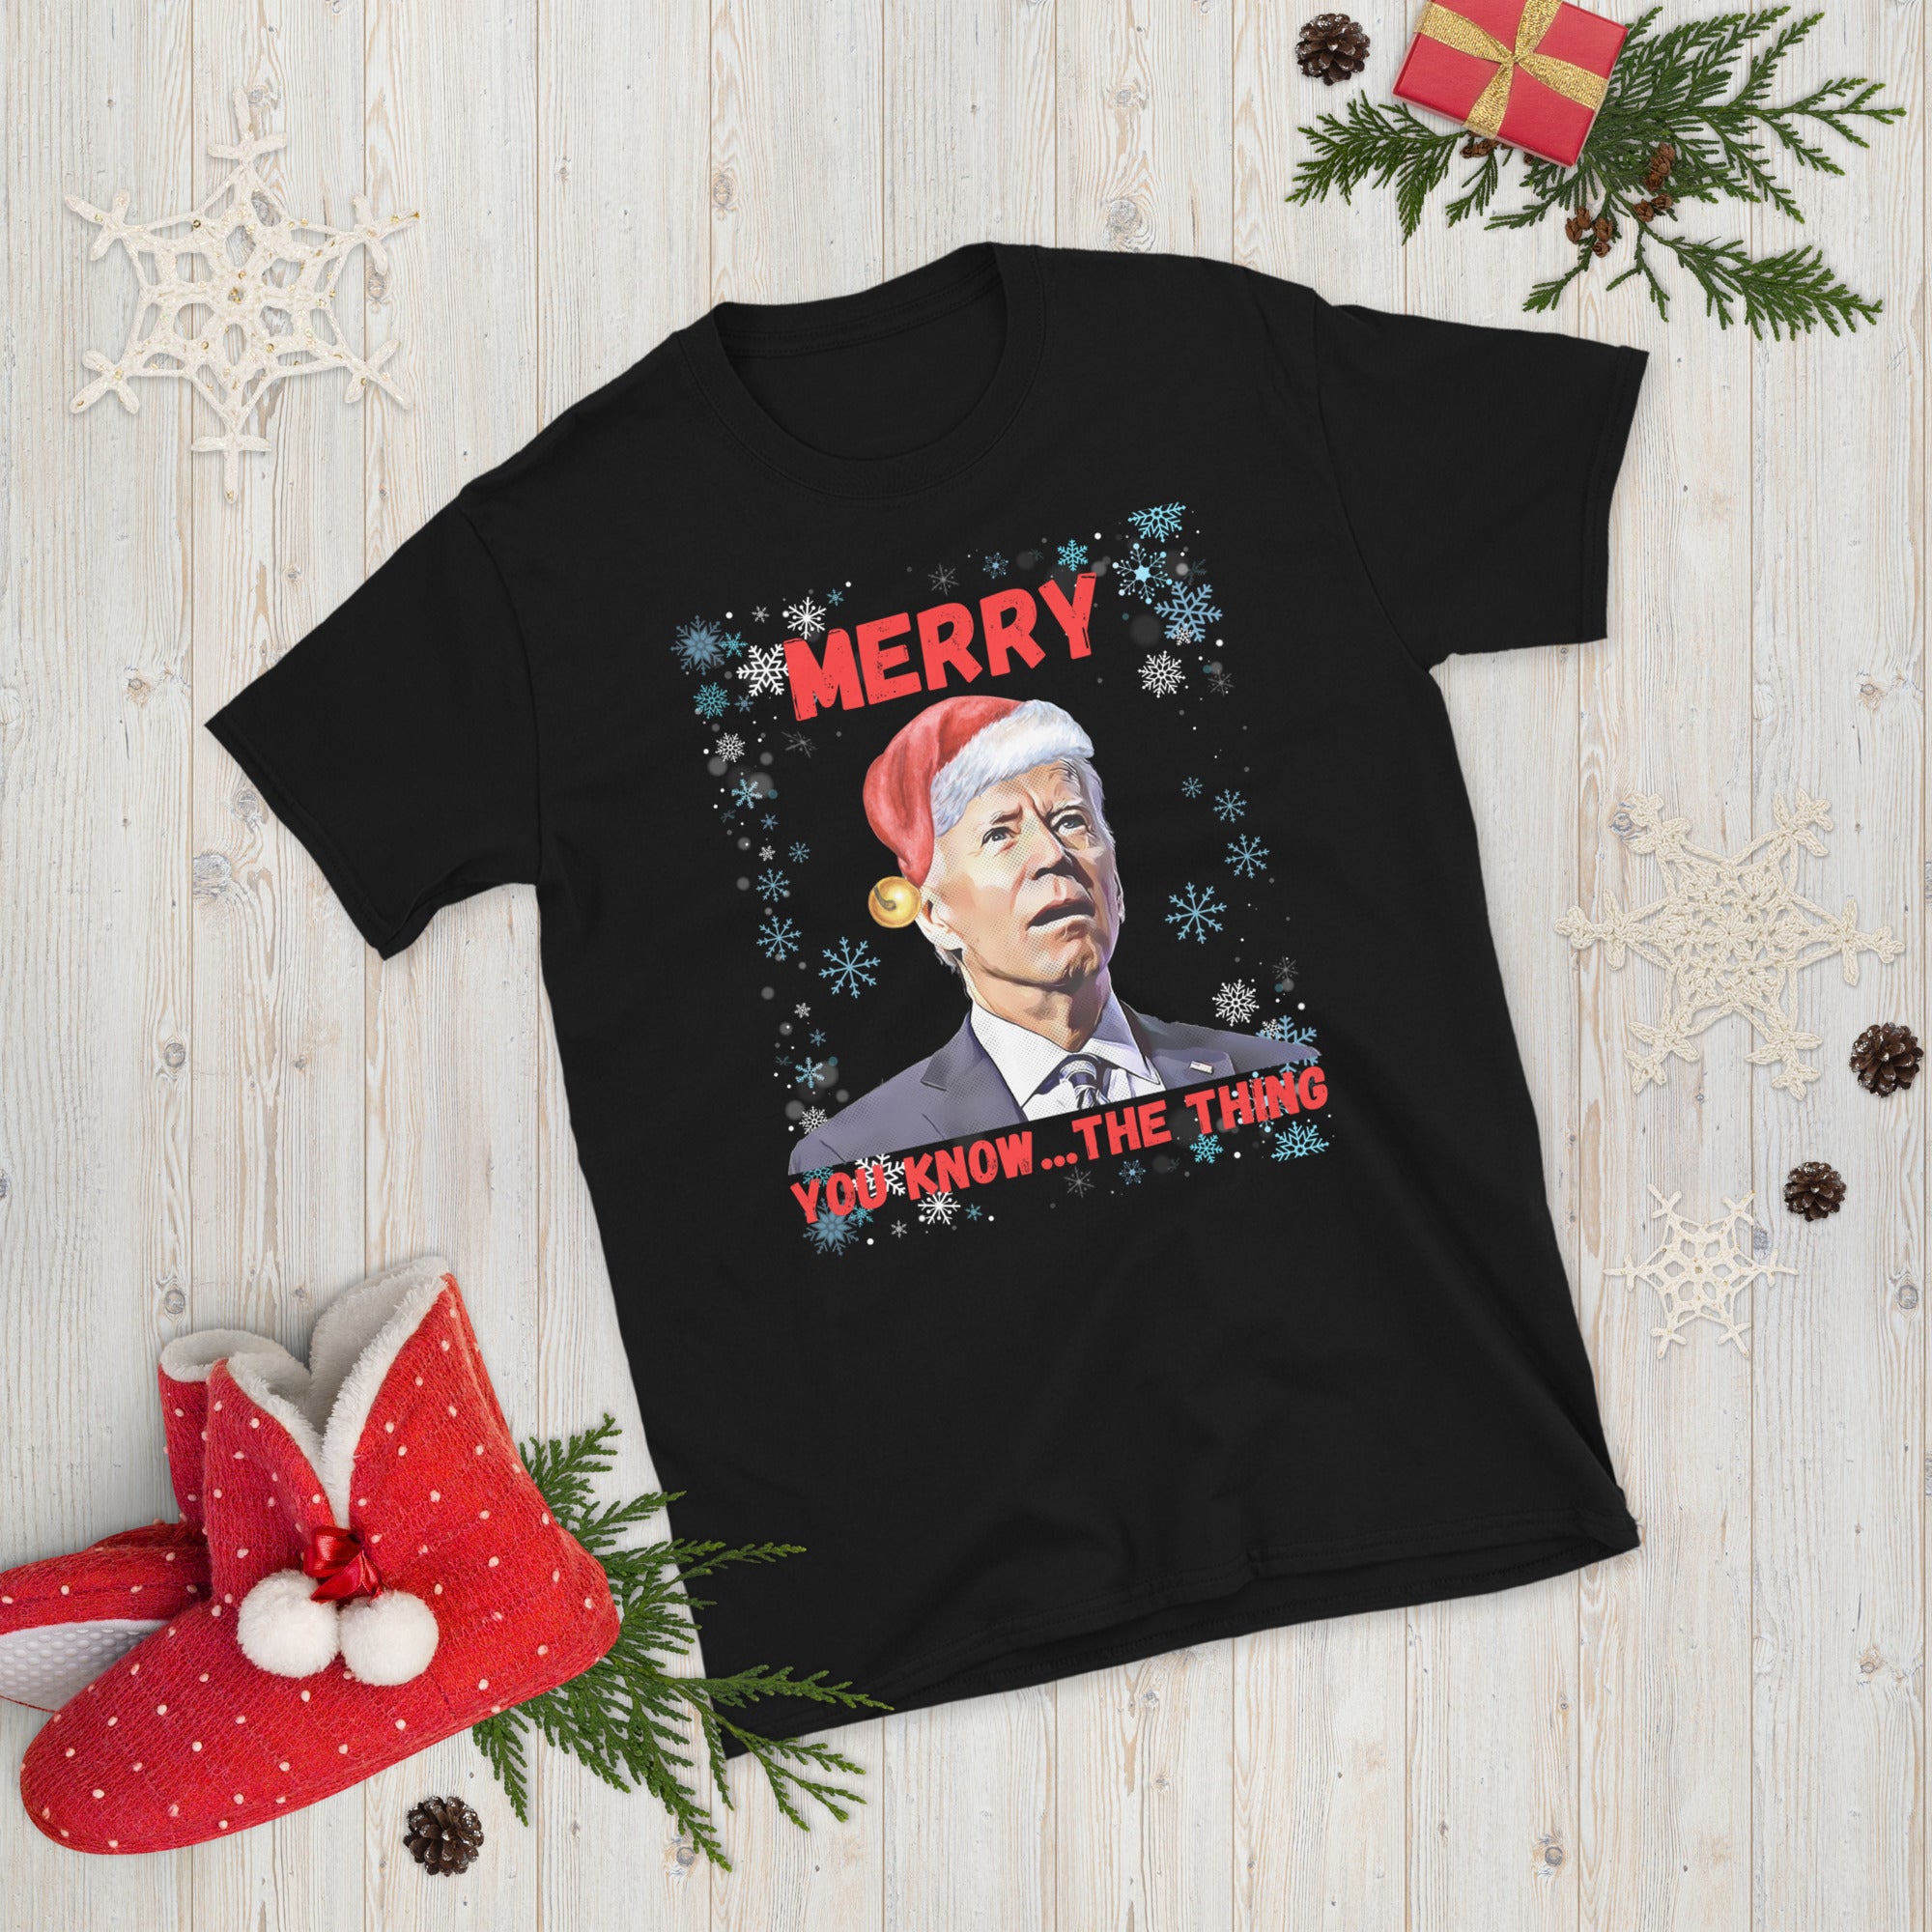 Merry You Know The Thing, Christmas Biden Shirt, Funny Confused Joe Biden Xmas Tshirt, Santa Joe Biden T Shirt, Republican Gifts, FJB Shirt - Madeinsea©